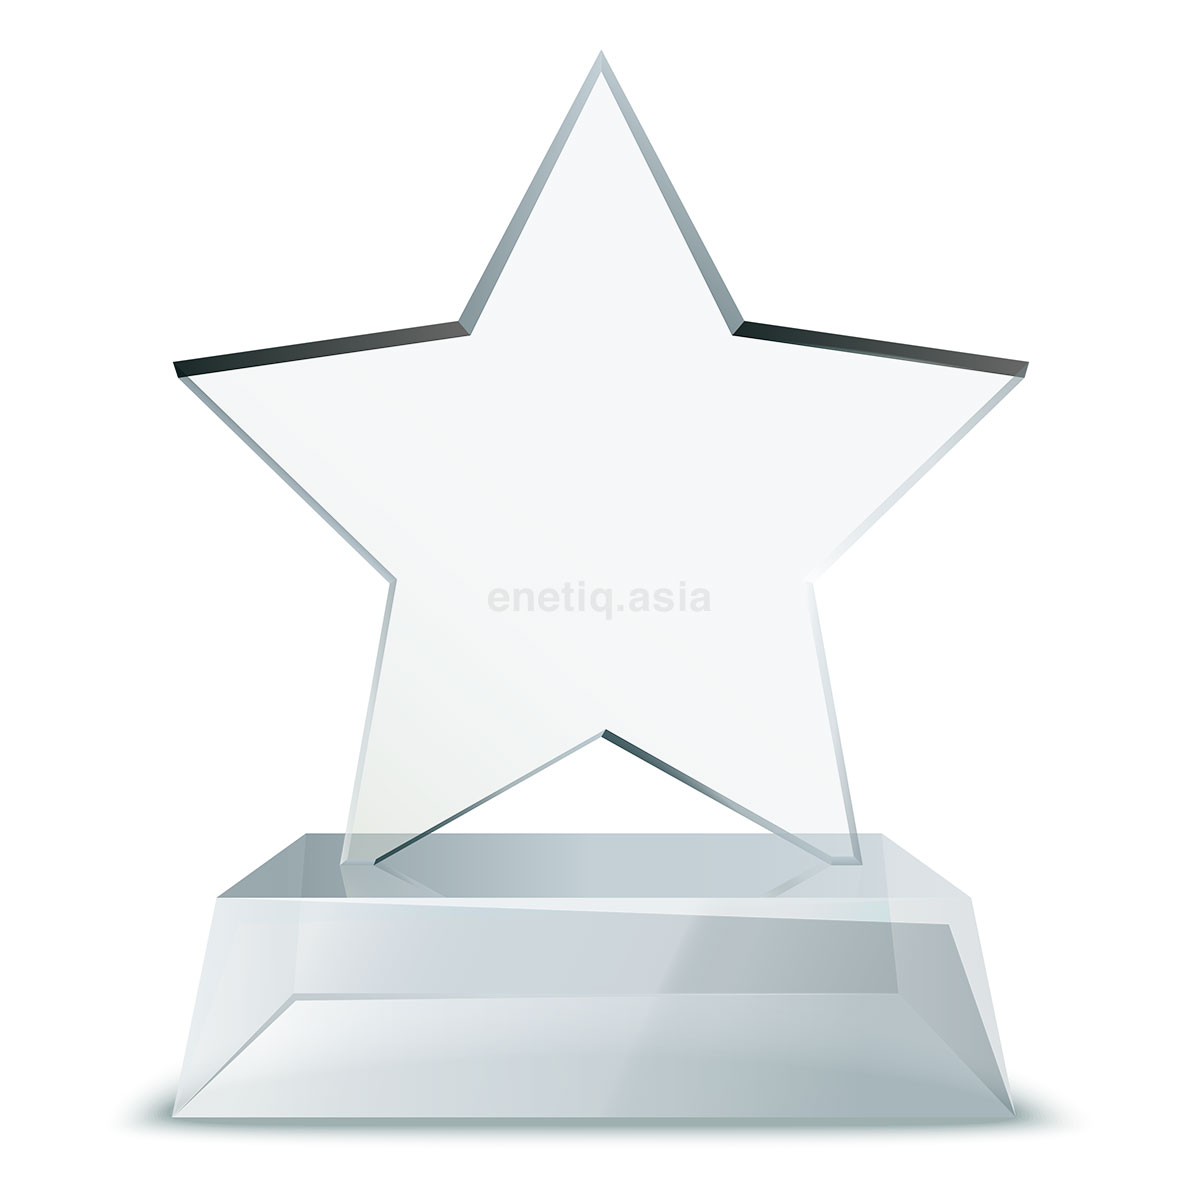 upright-star-crystal-award-trophy